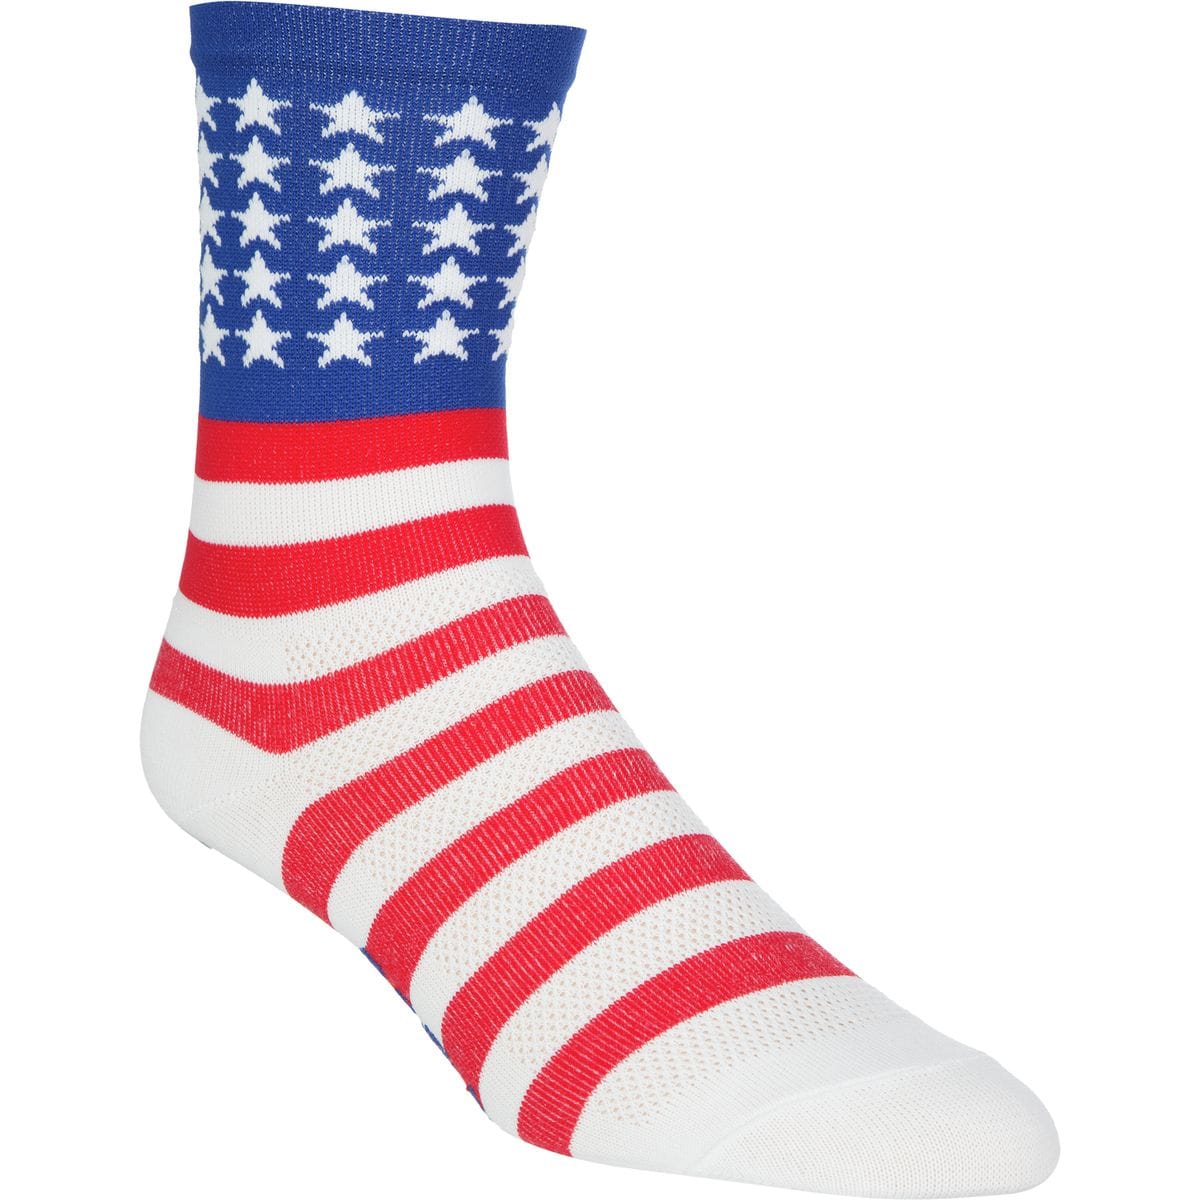 DeFeet Aireator USA Hi Top 5in Sock Men's